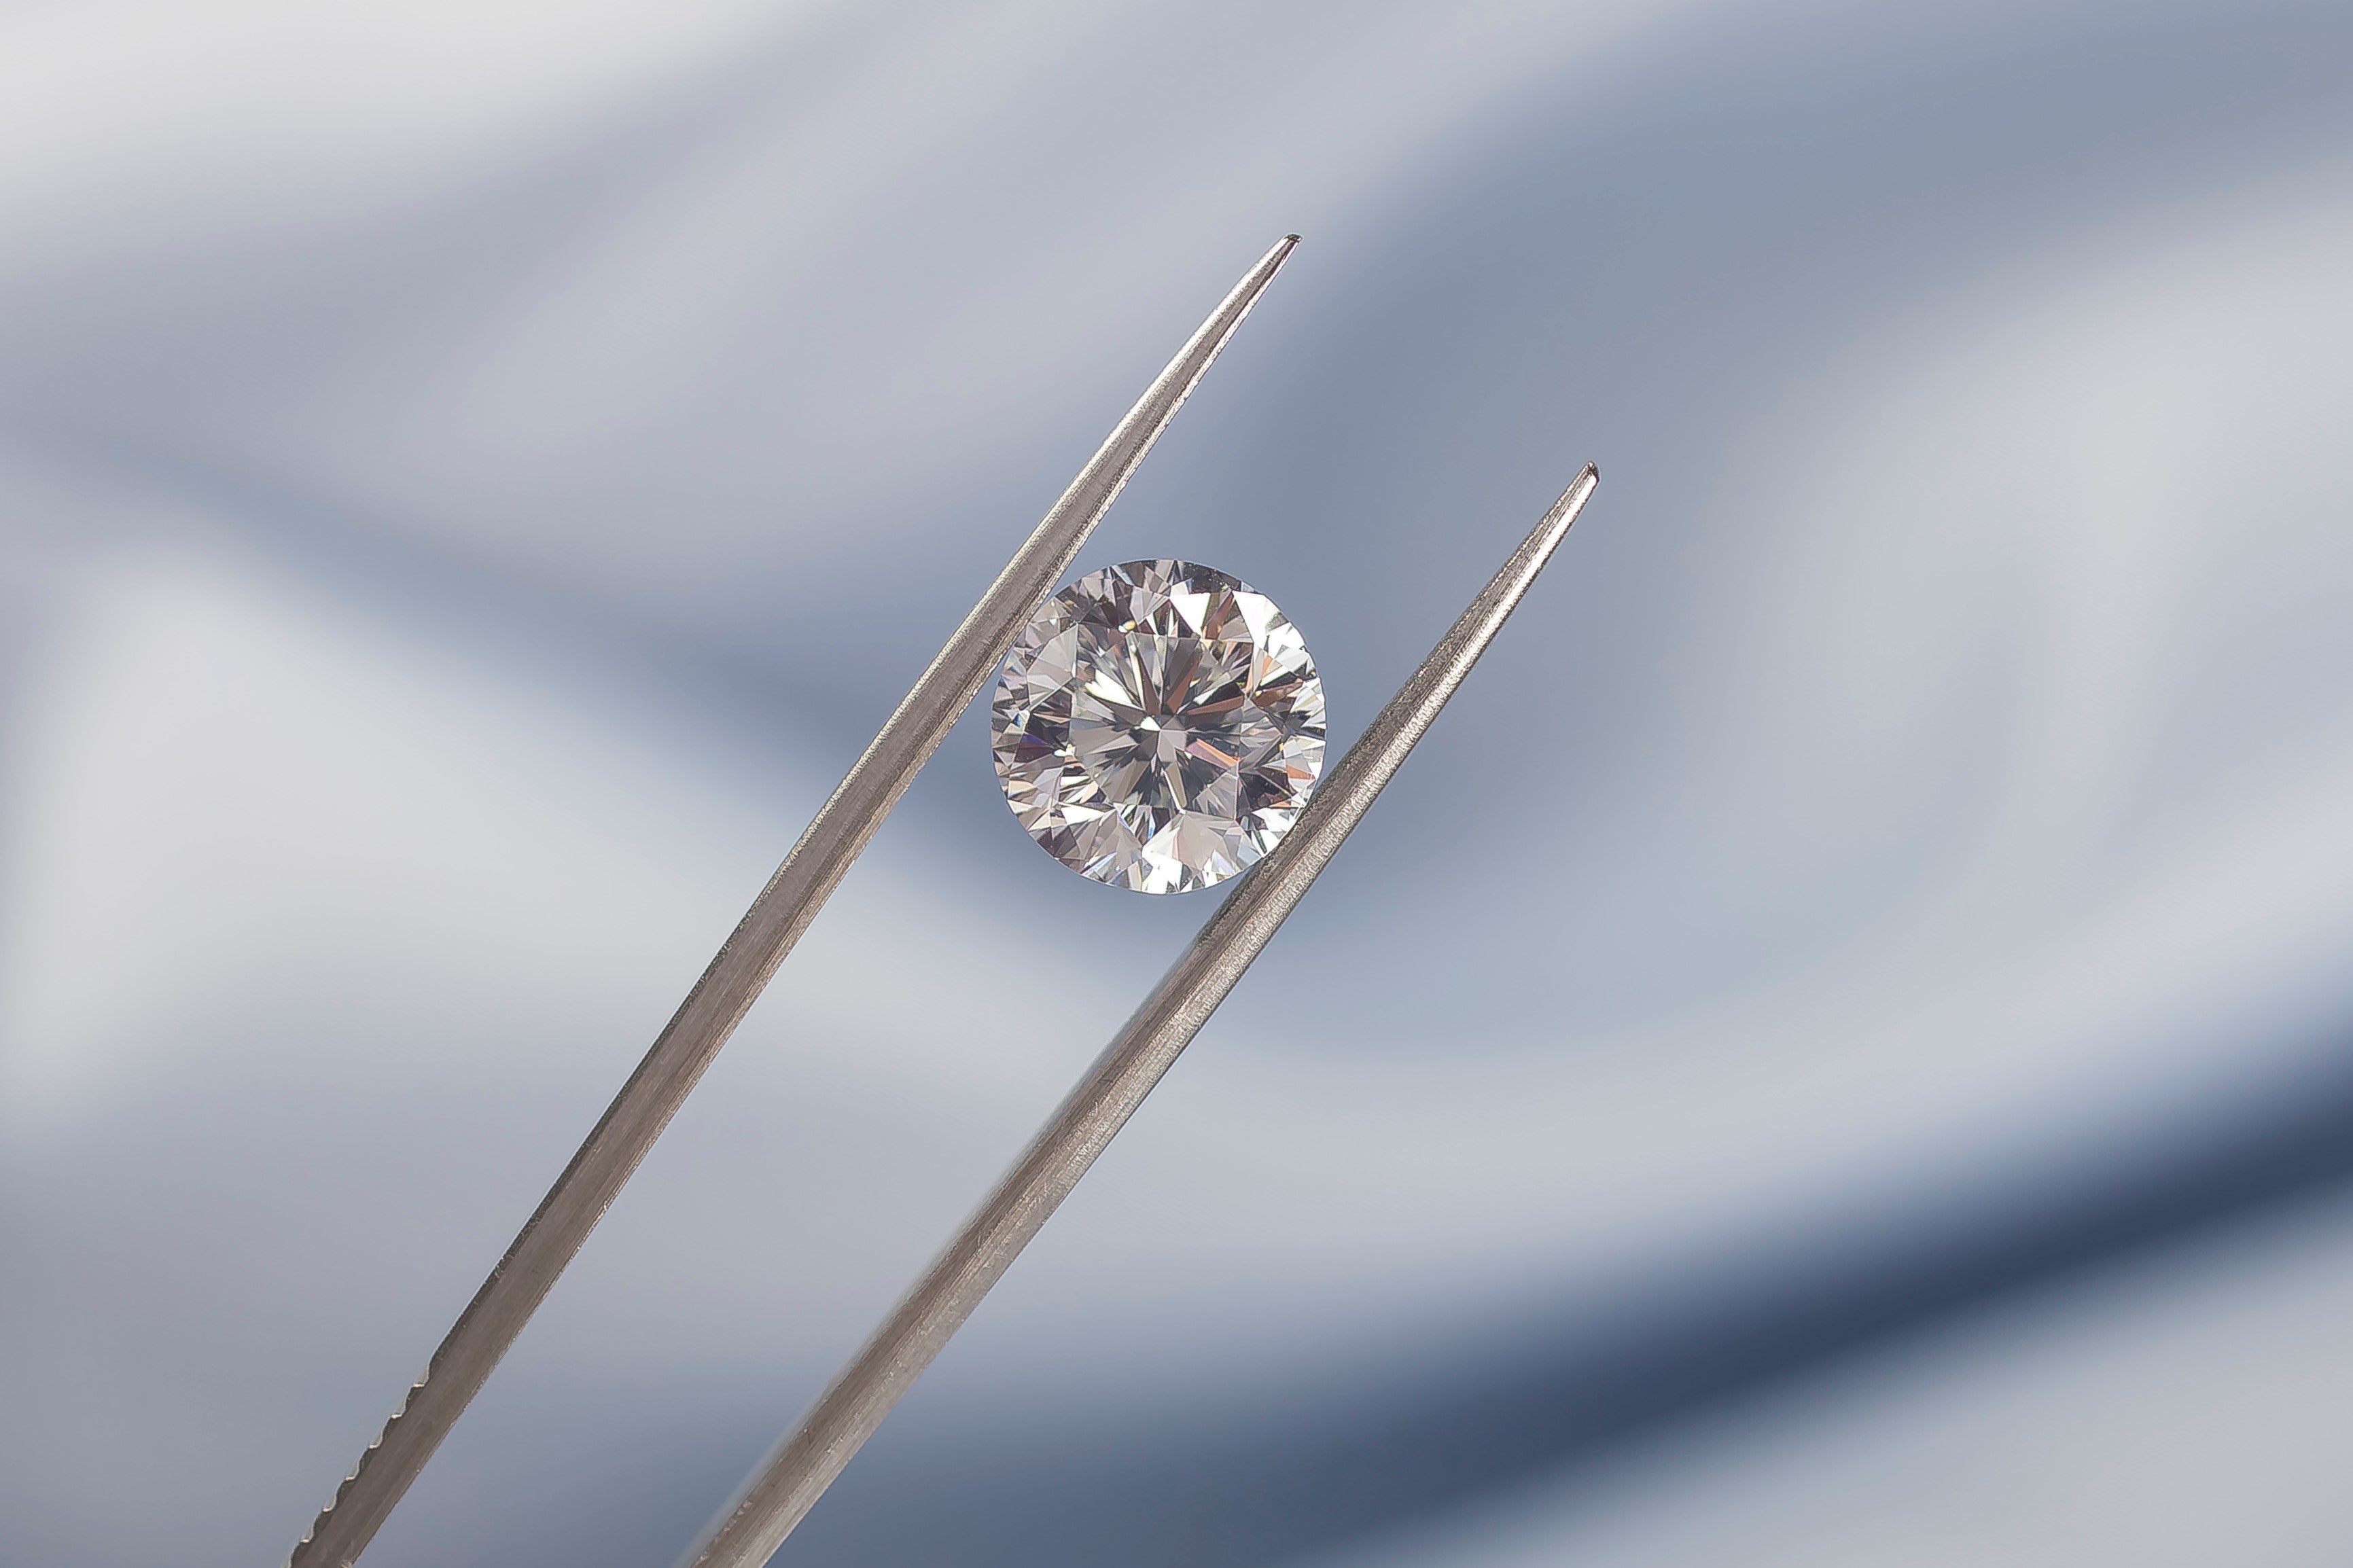 Opsplitsen gans Auroch 7 common mistakes when buying a diamond - Royal Coster Diamonds